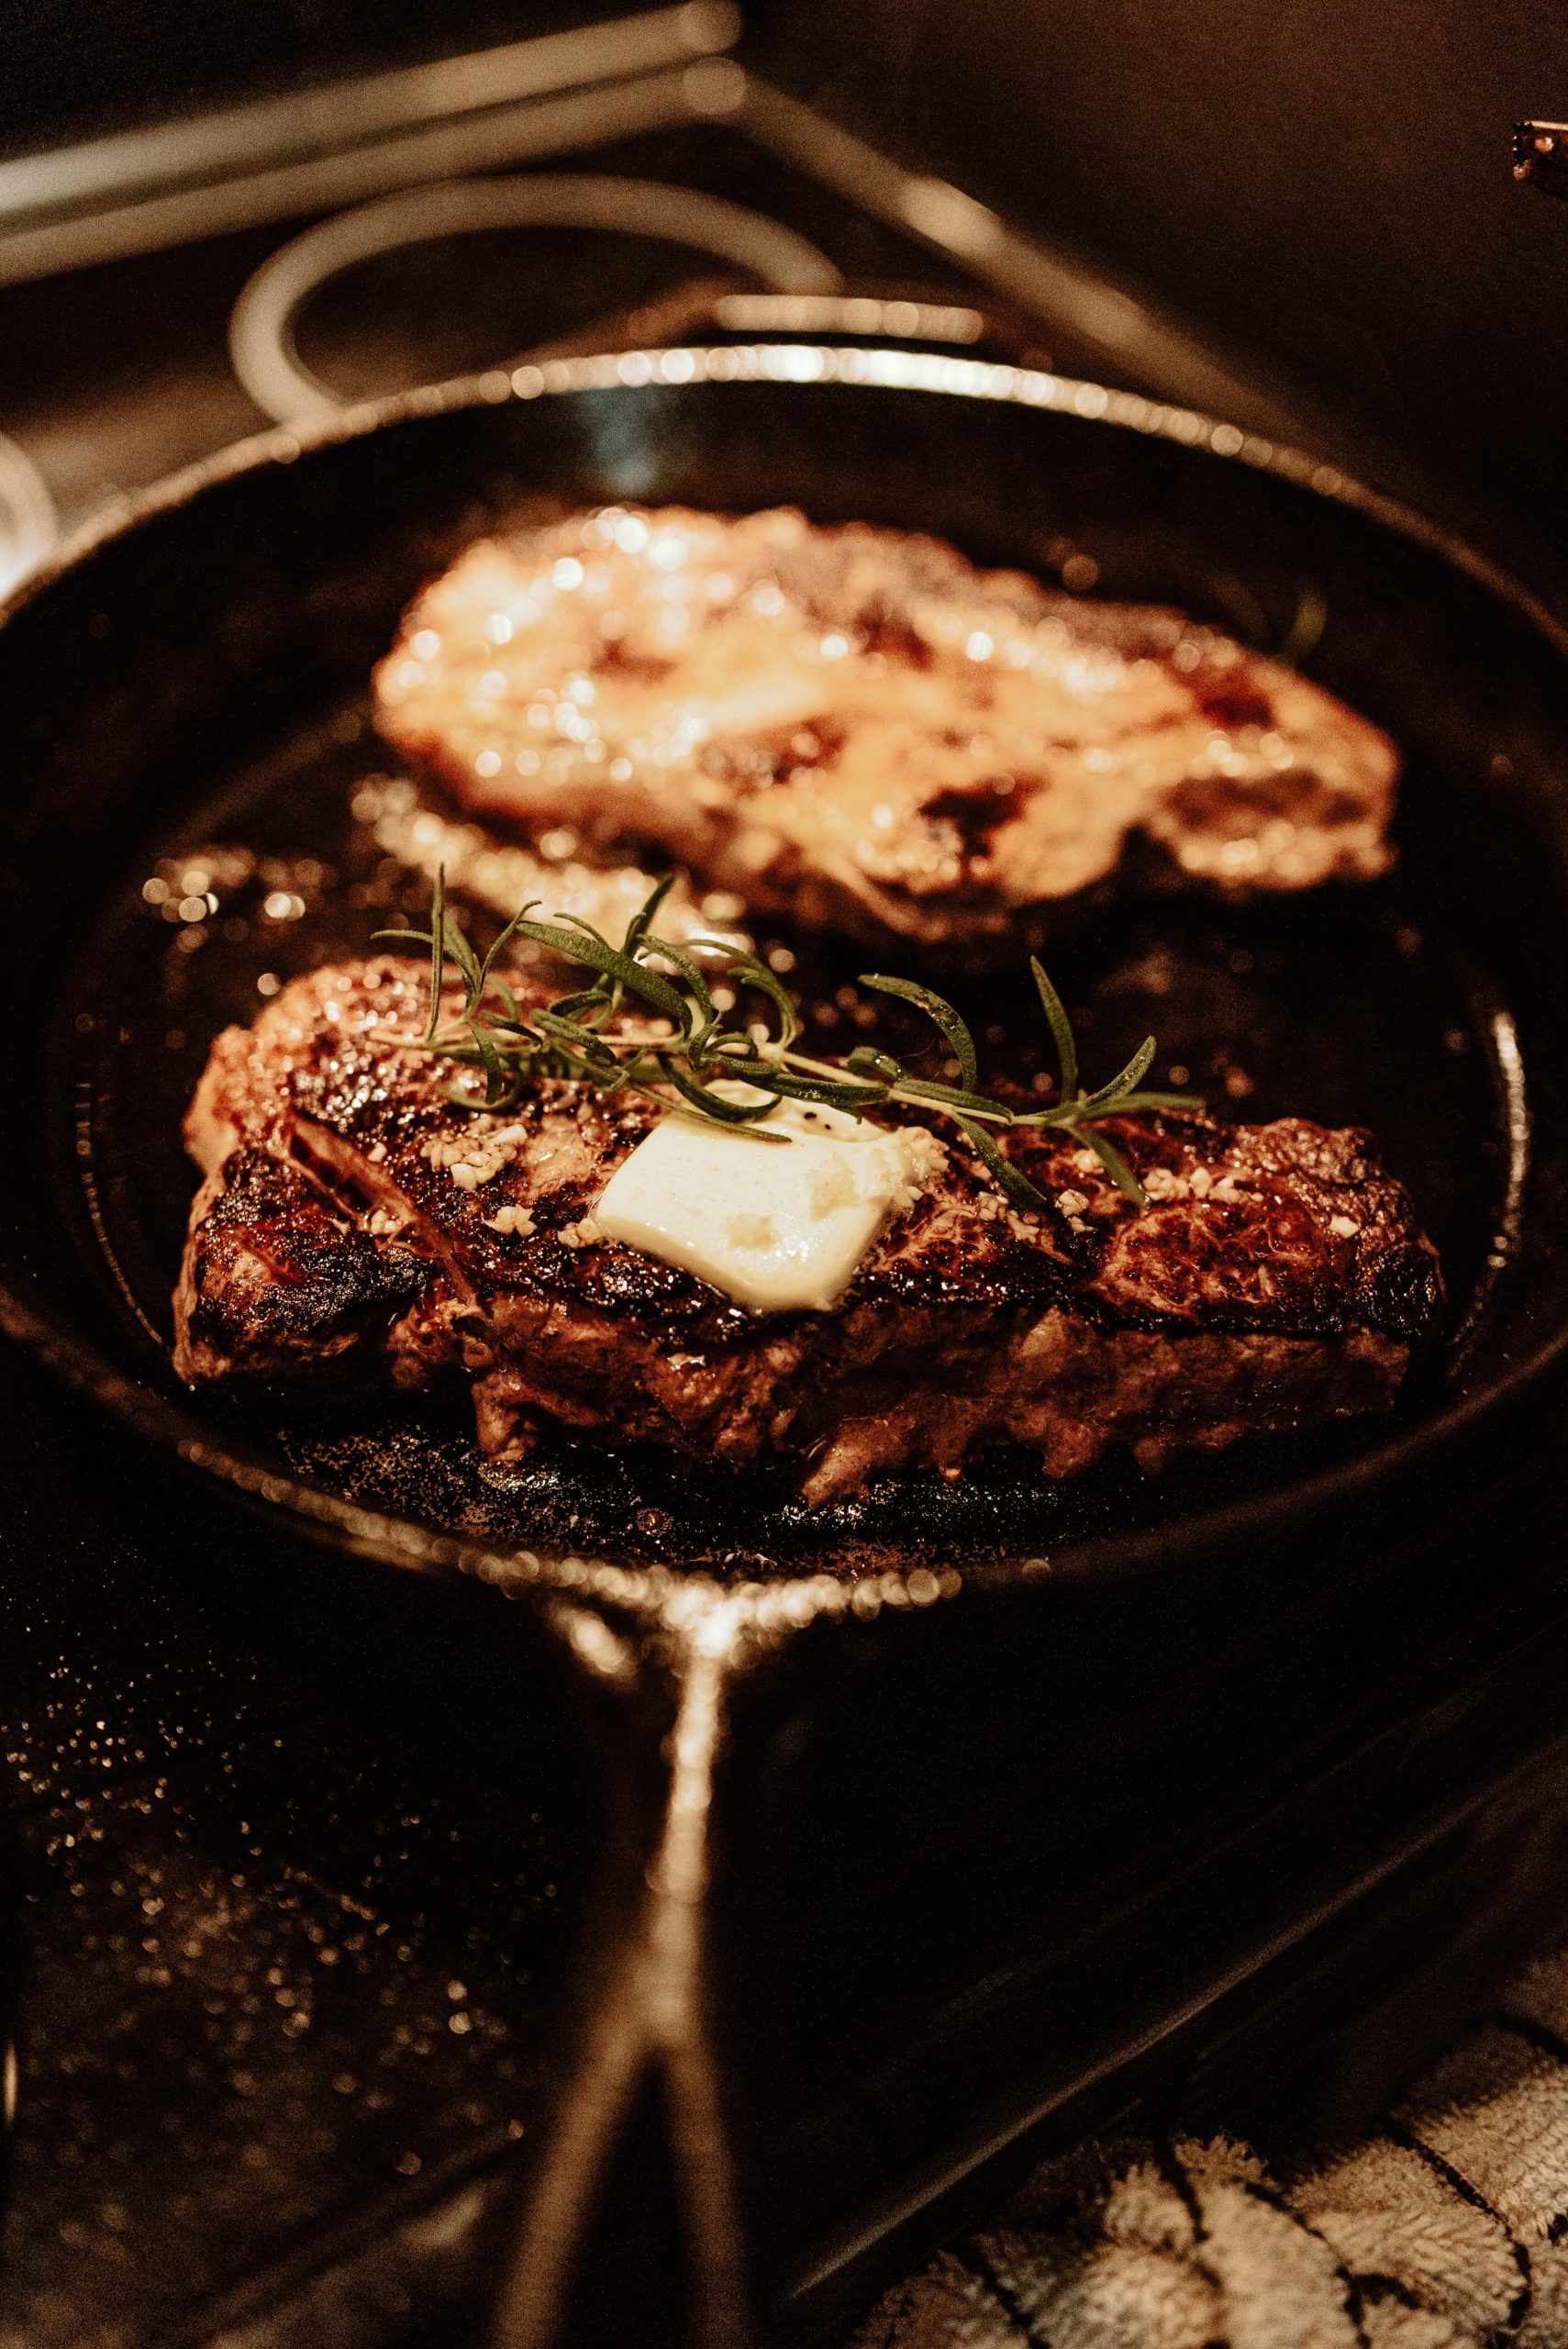 Date Night: Ultimate Steak-cation Class February 13th